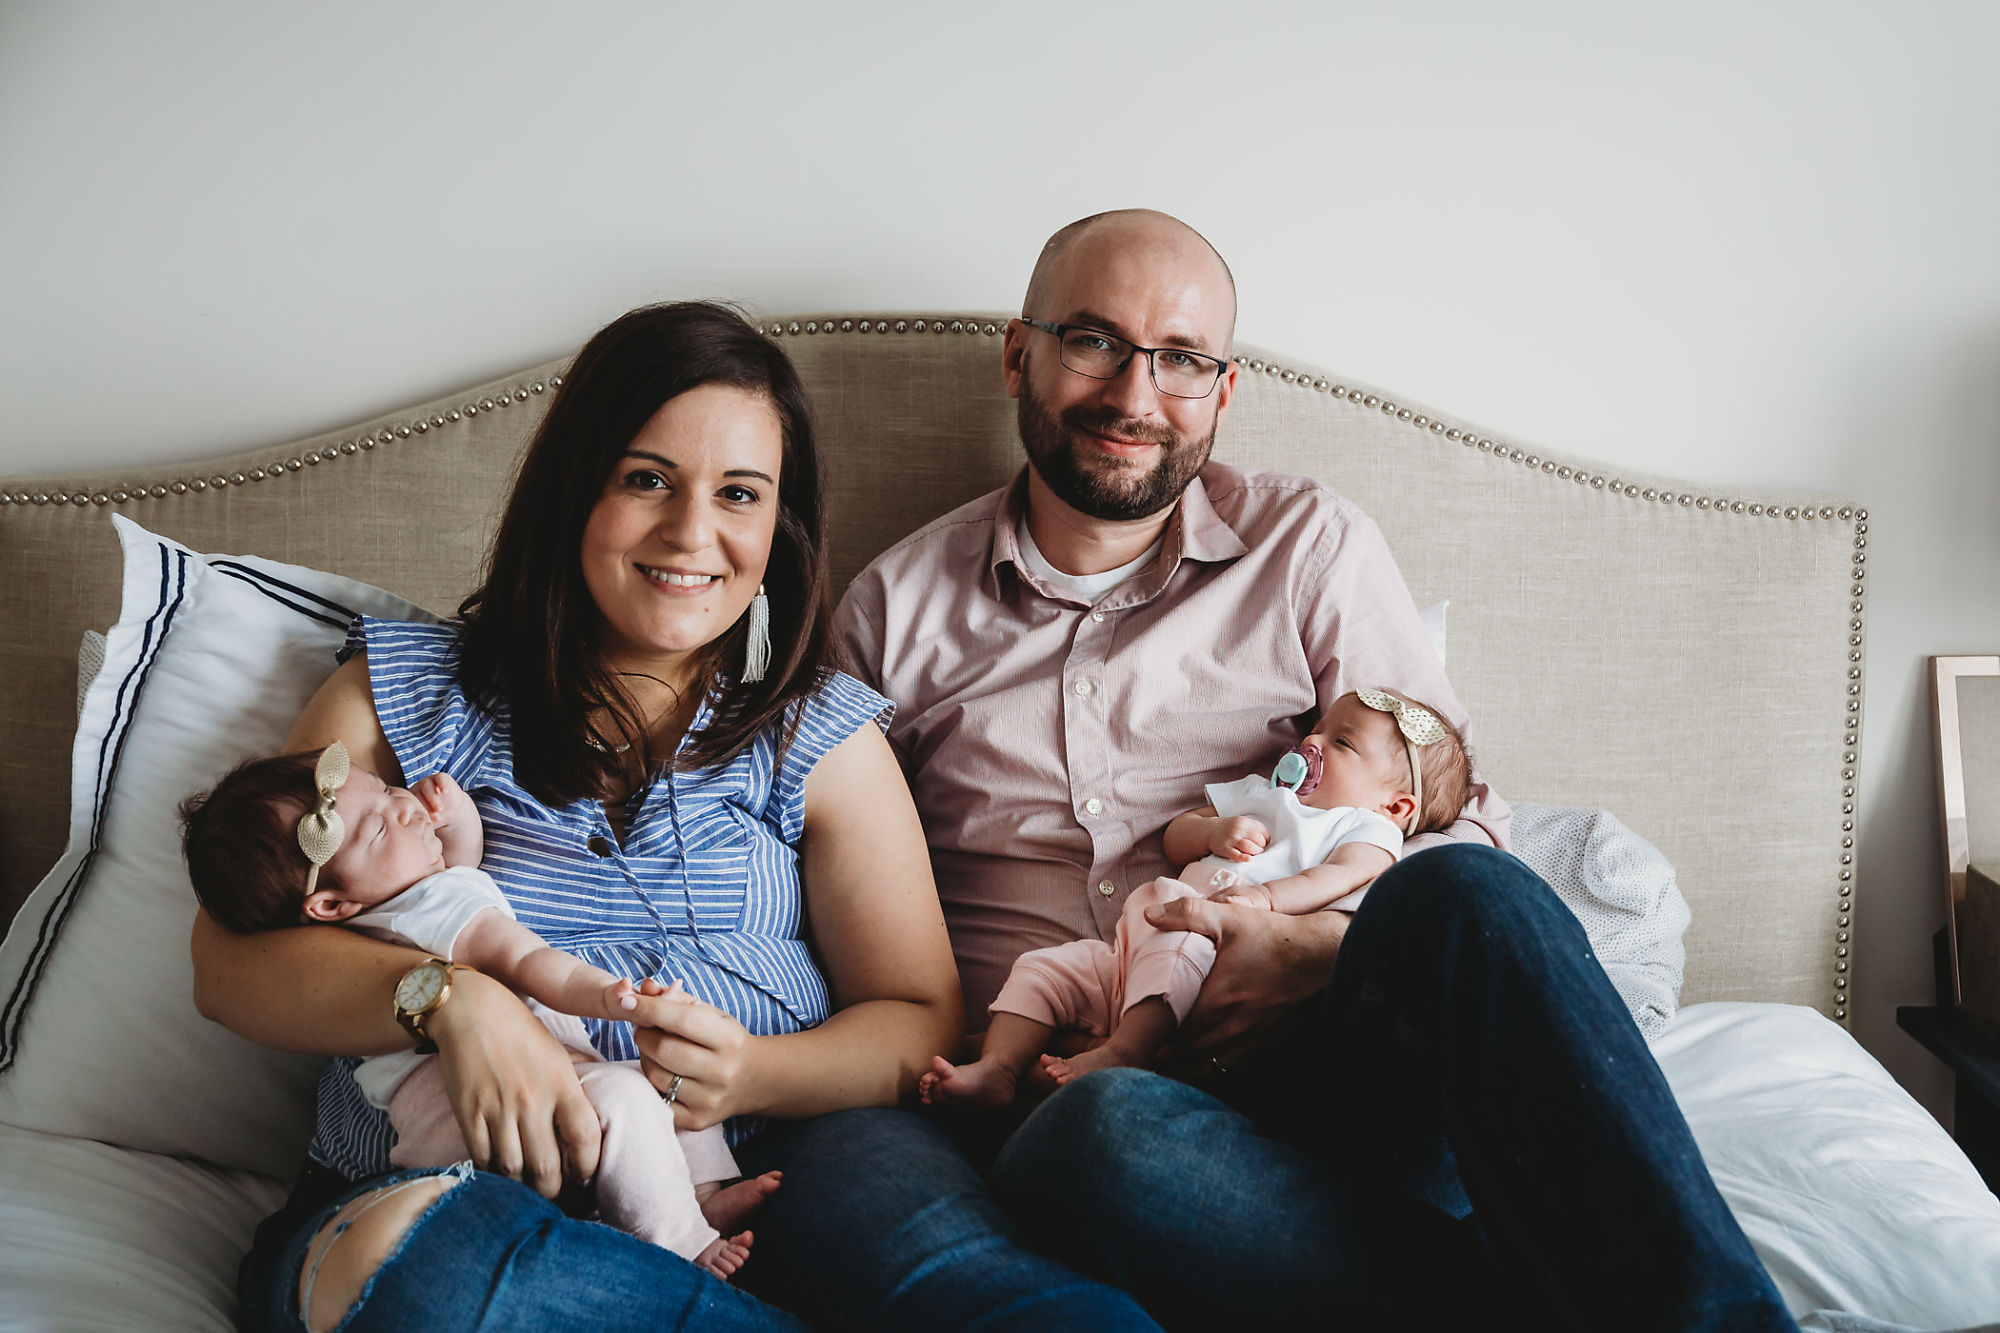 Lifestyle Hamilton Newborn Photographer Jennifer Blaak captures these new parents of twins at home in Hamilton.